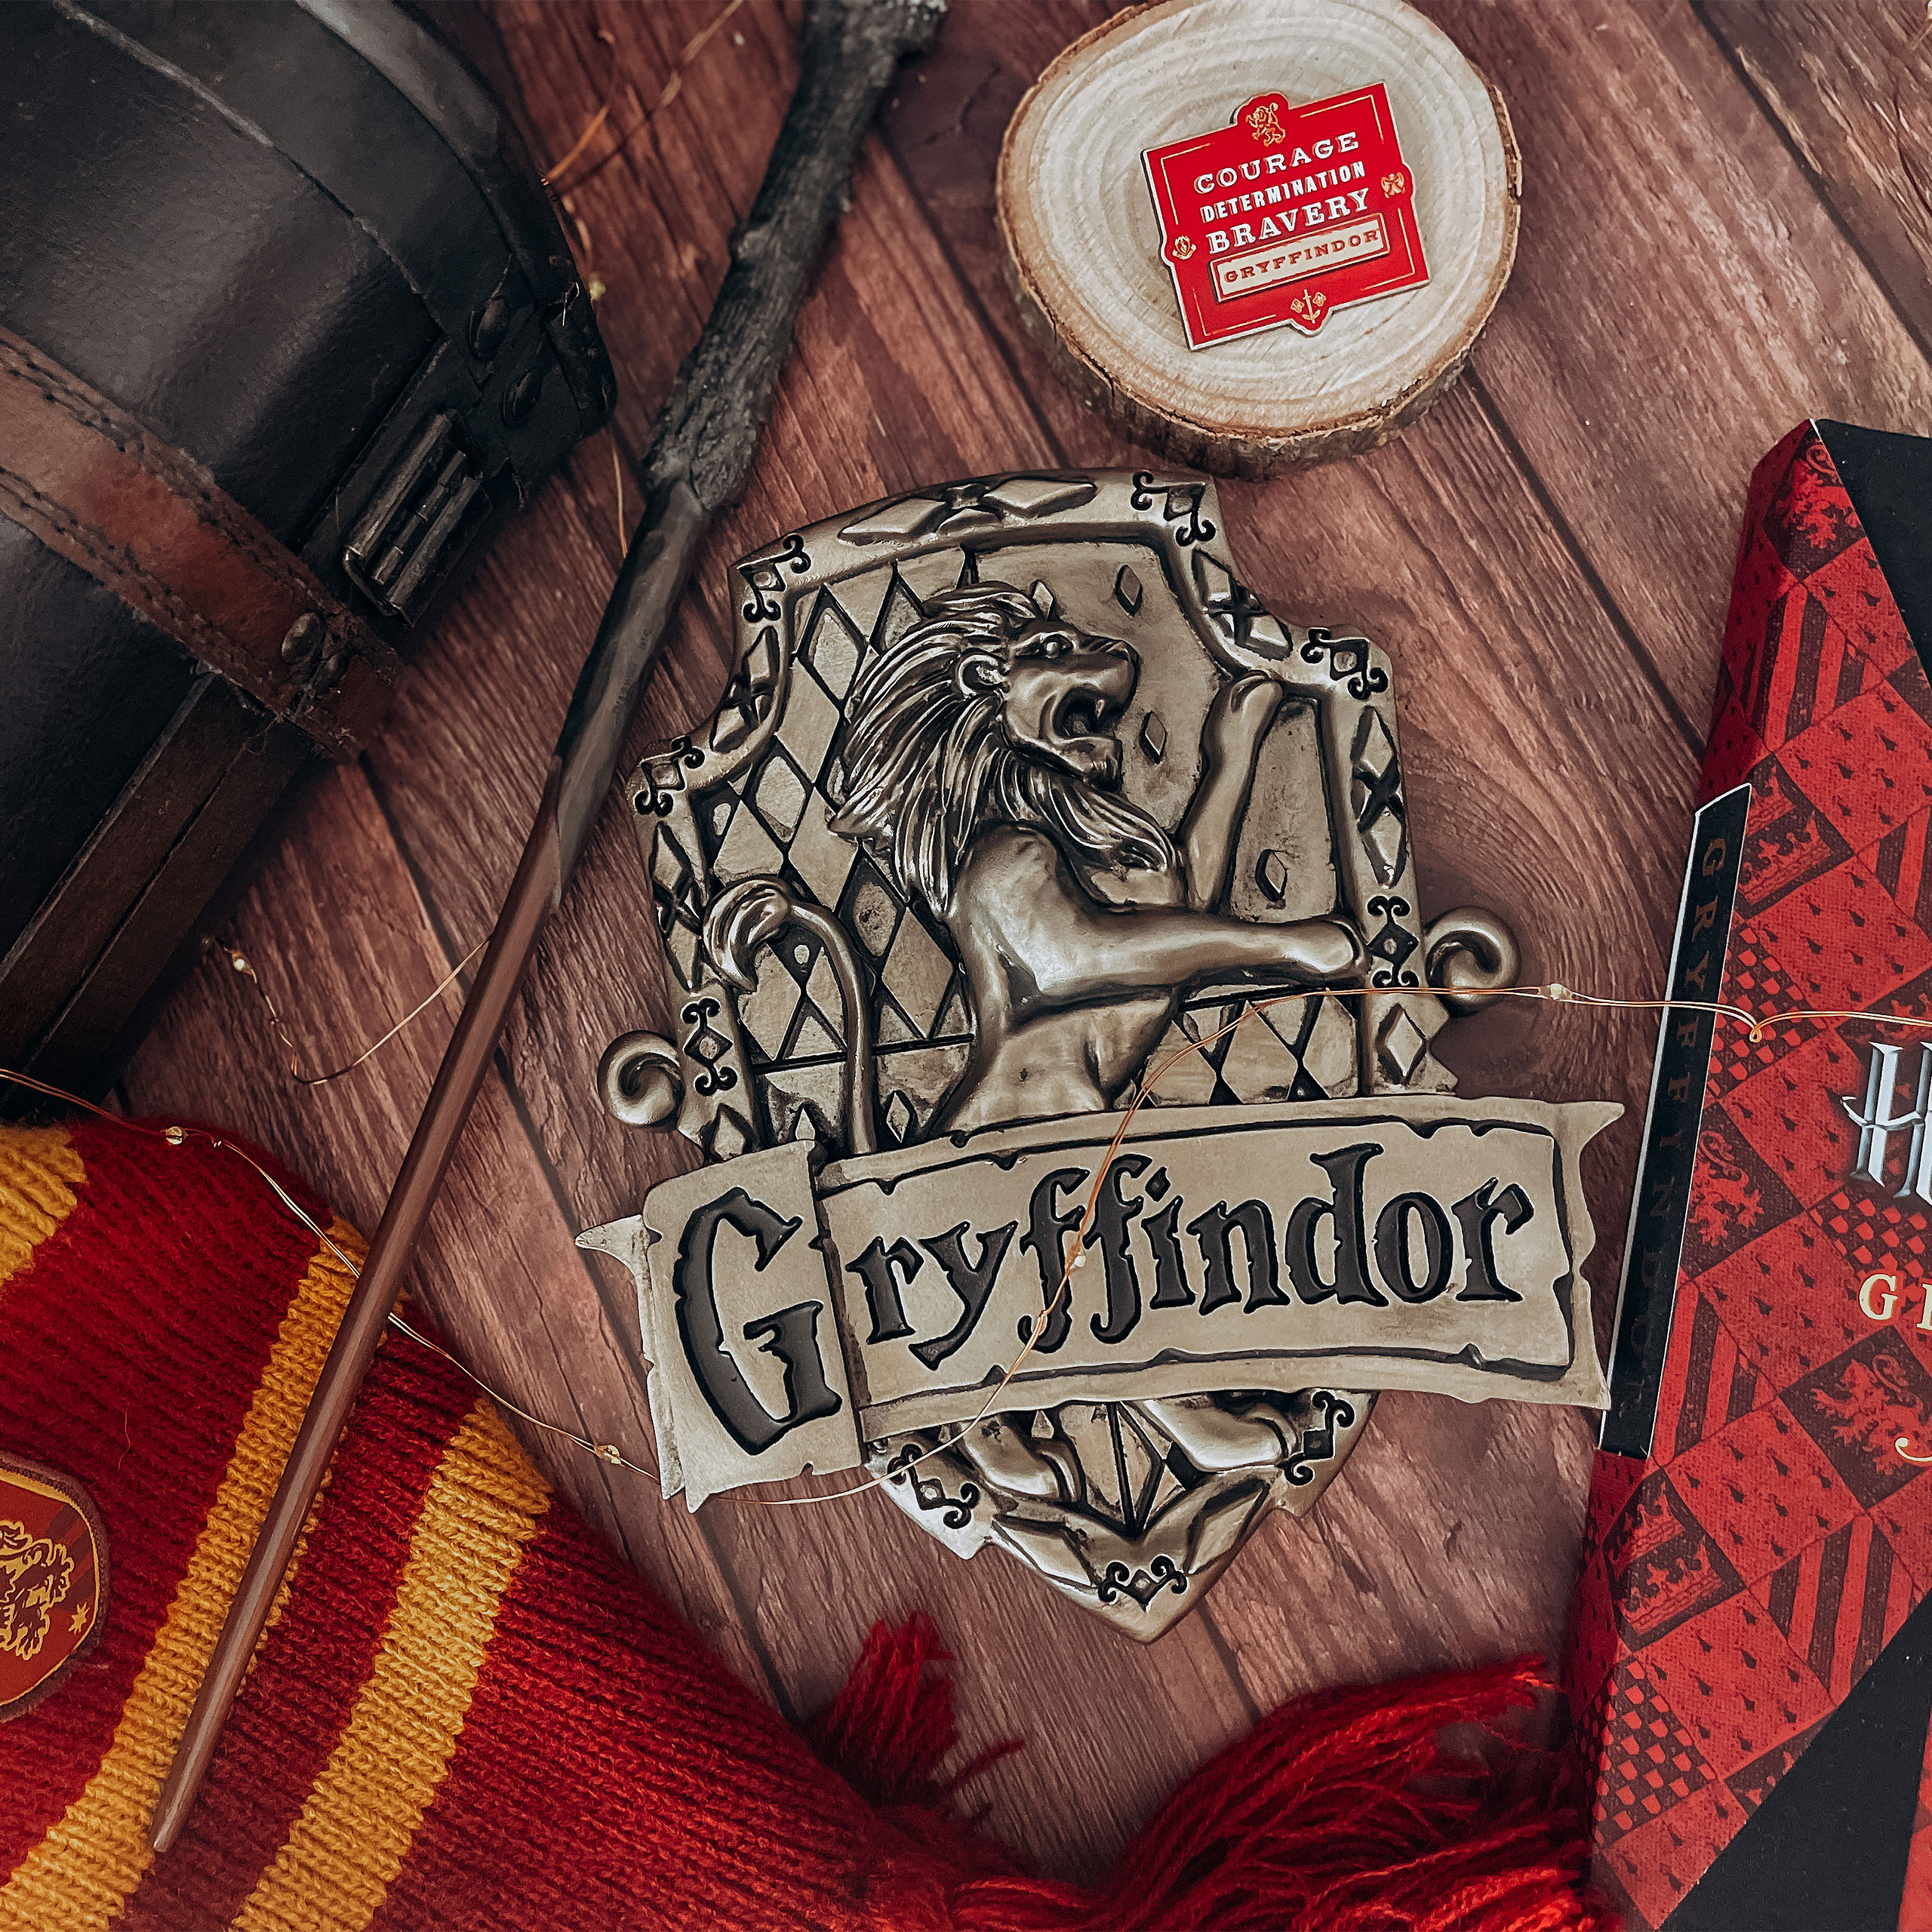 Harry Potter - Gryffindor Crest Wall Art